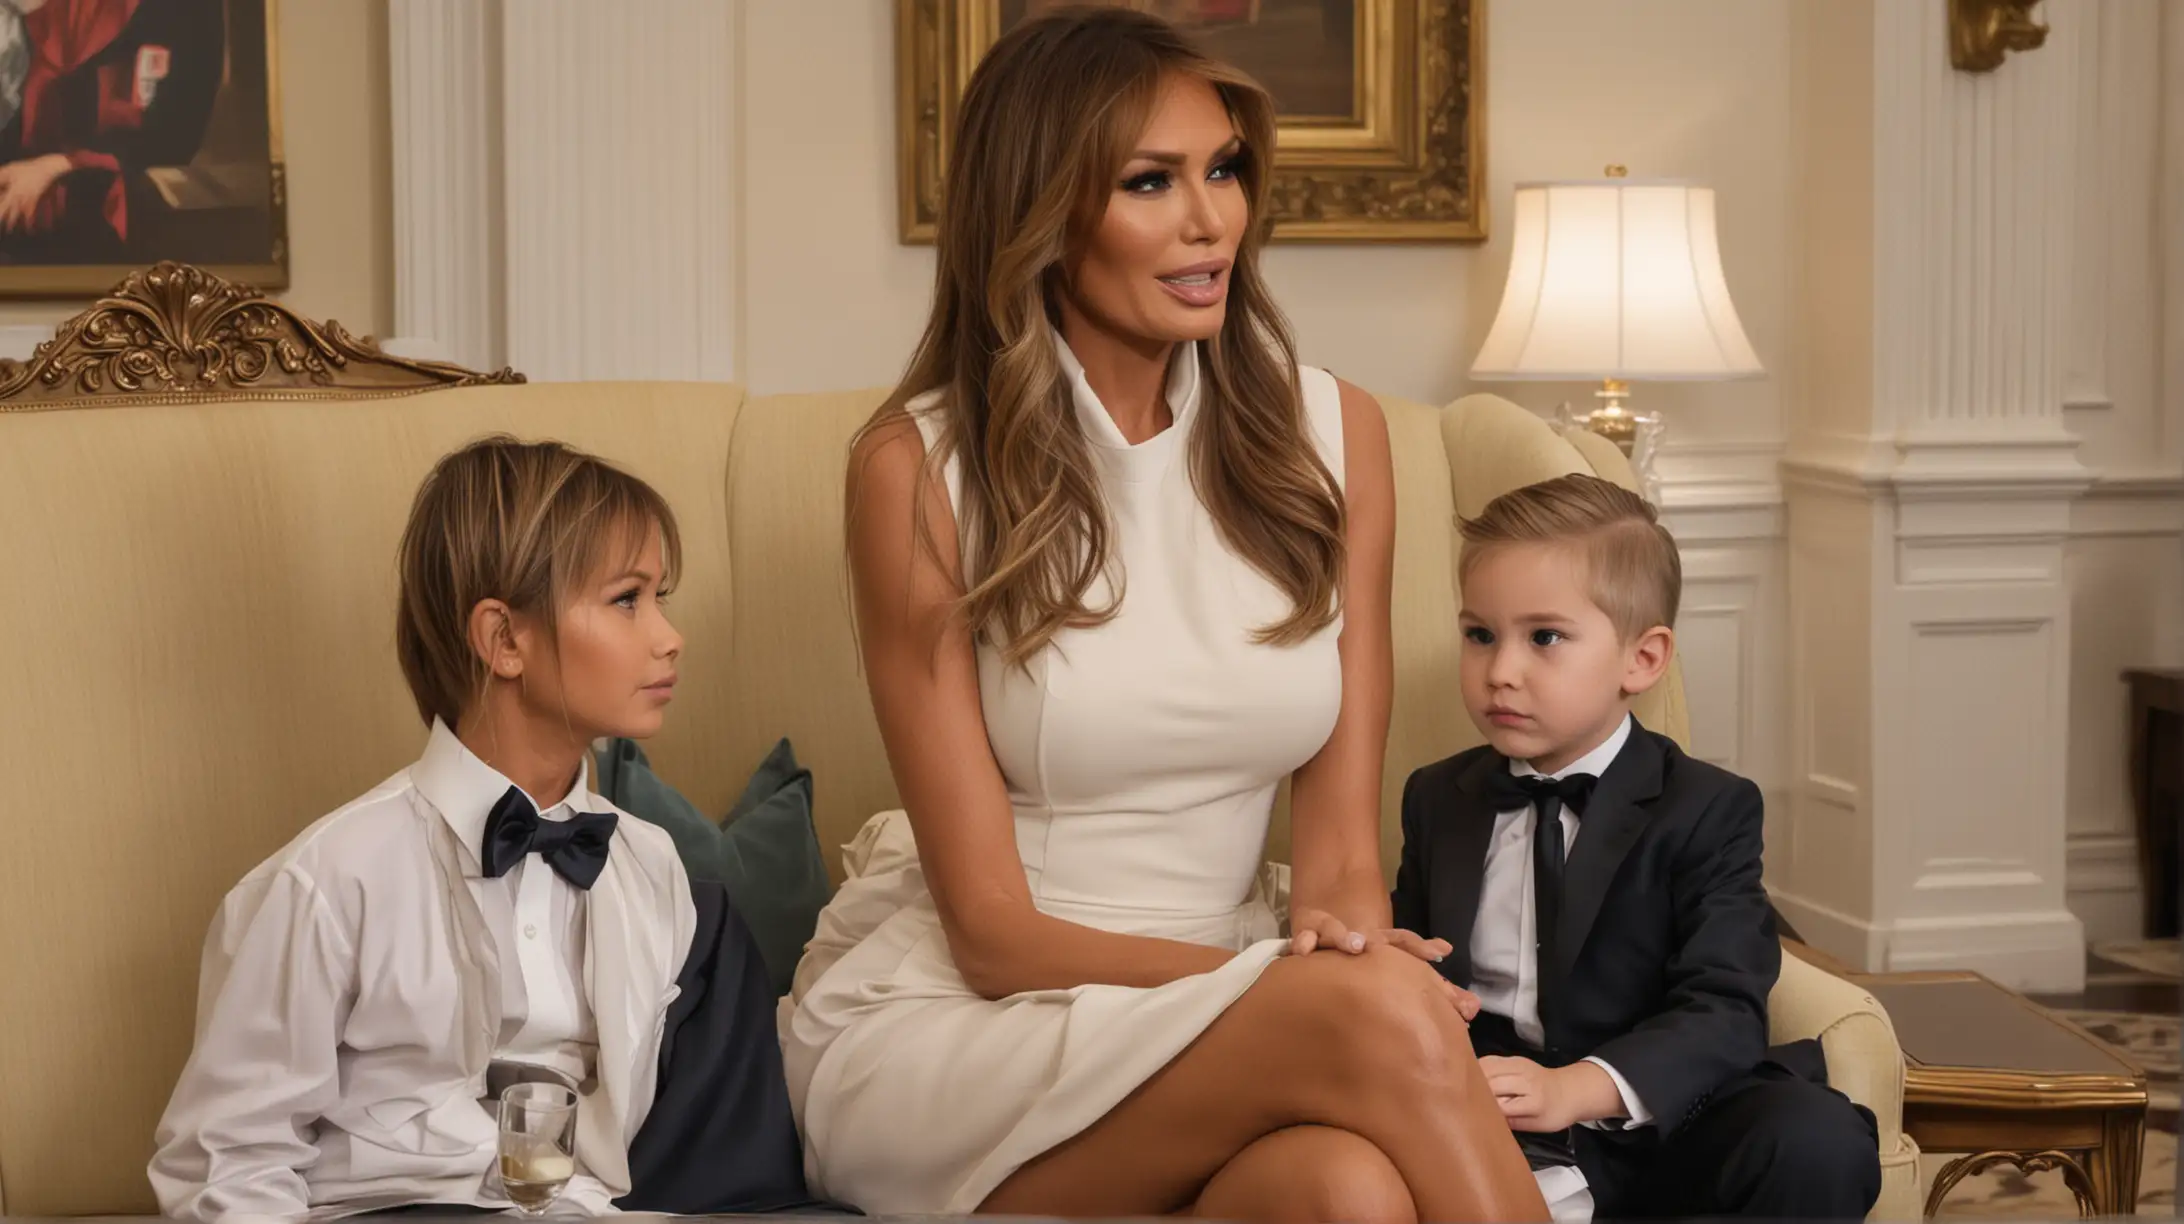 Melania Trump Sitting with a Boy in a Casual Setting